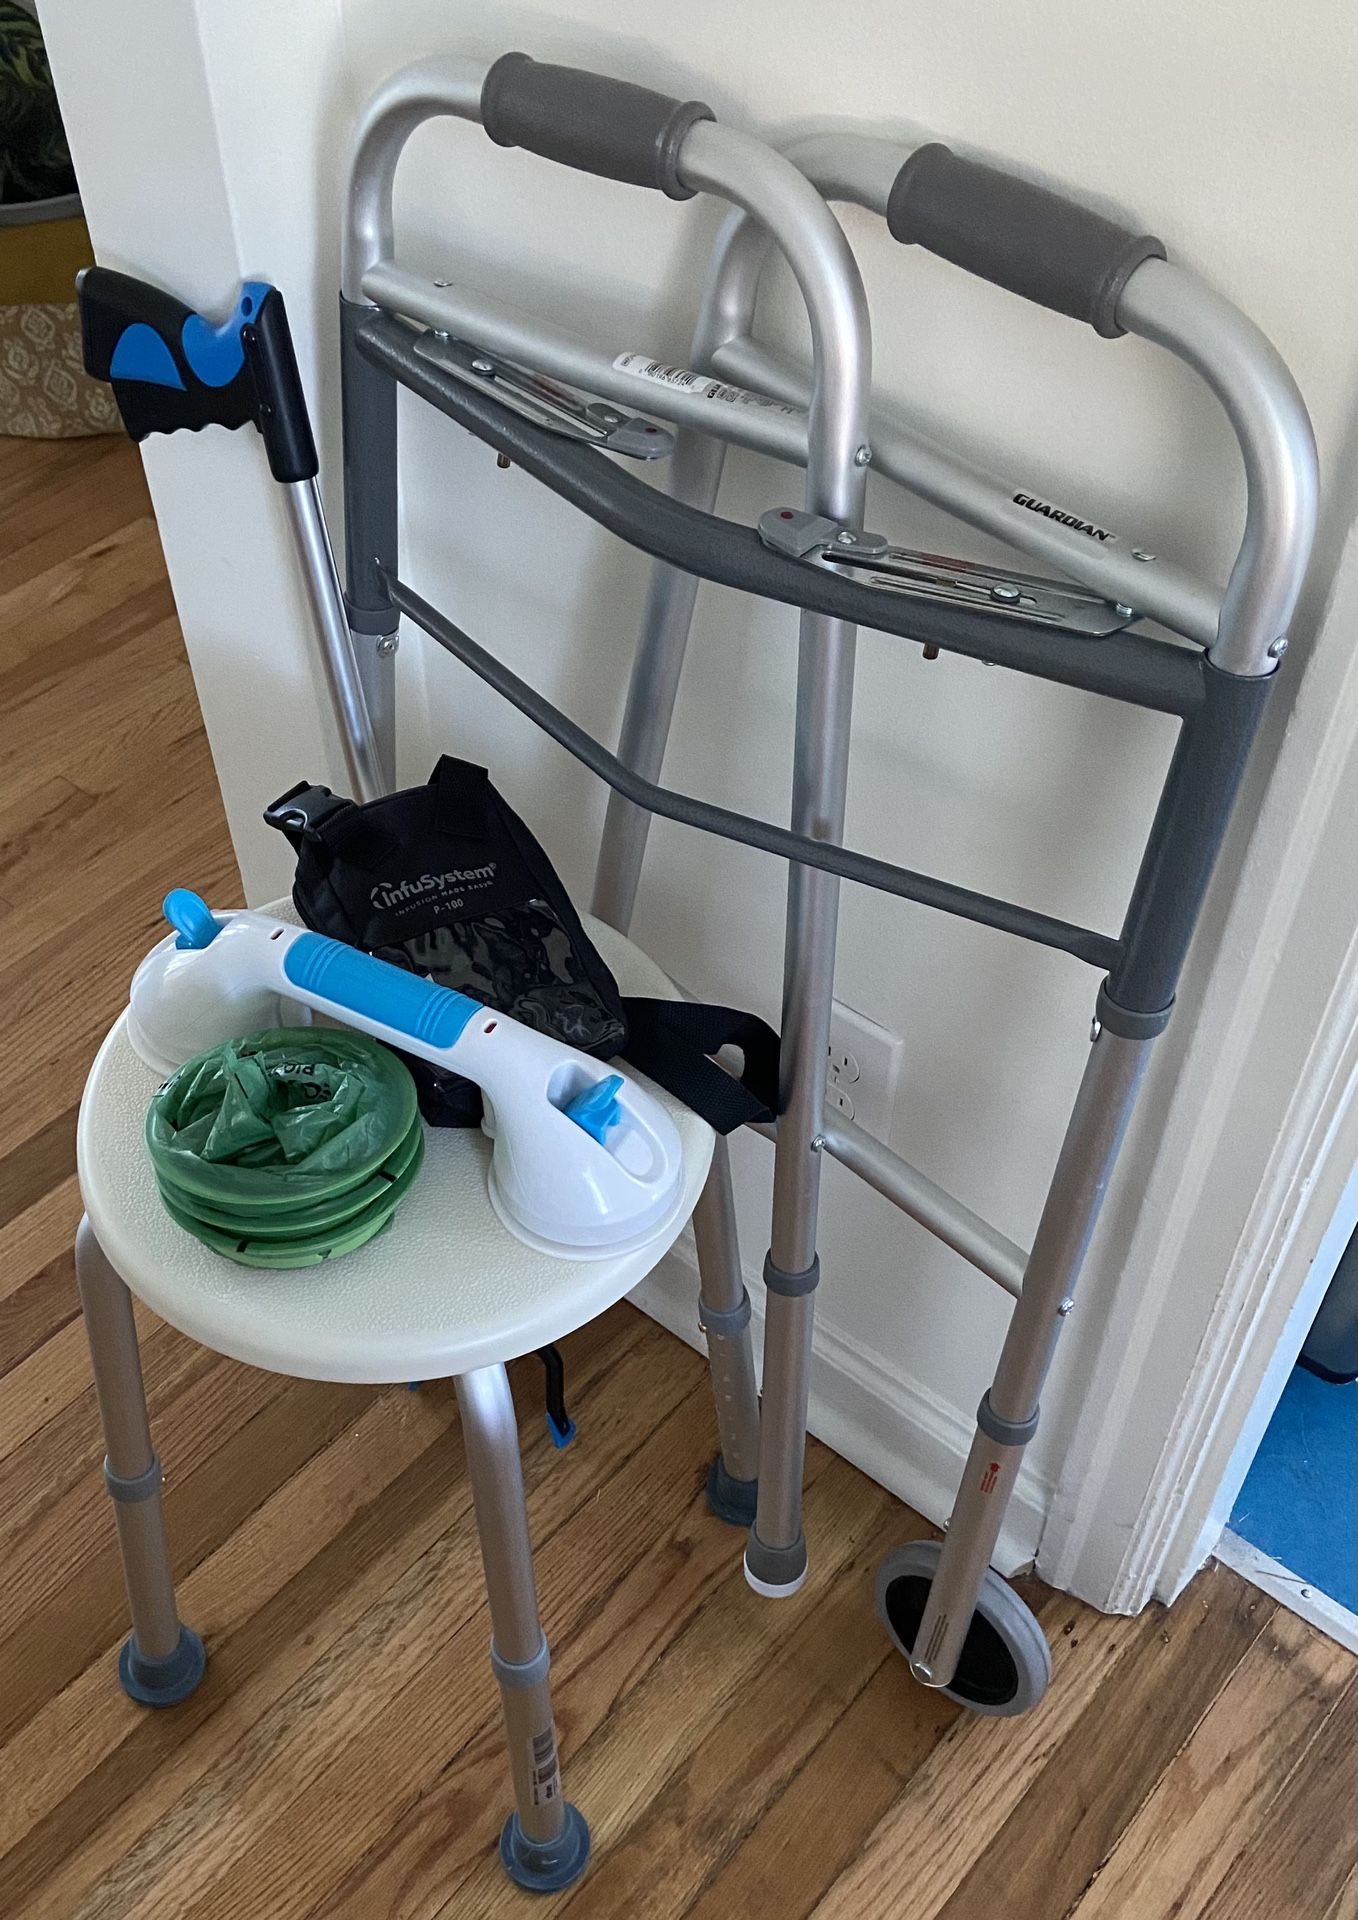 Walker, Shower stool & Misc Health items